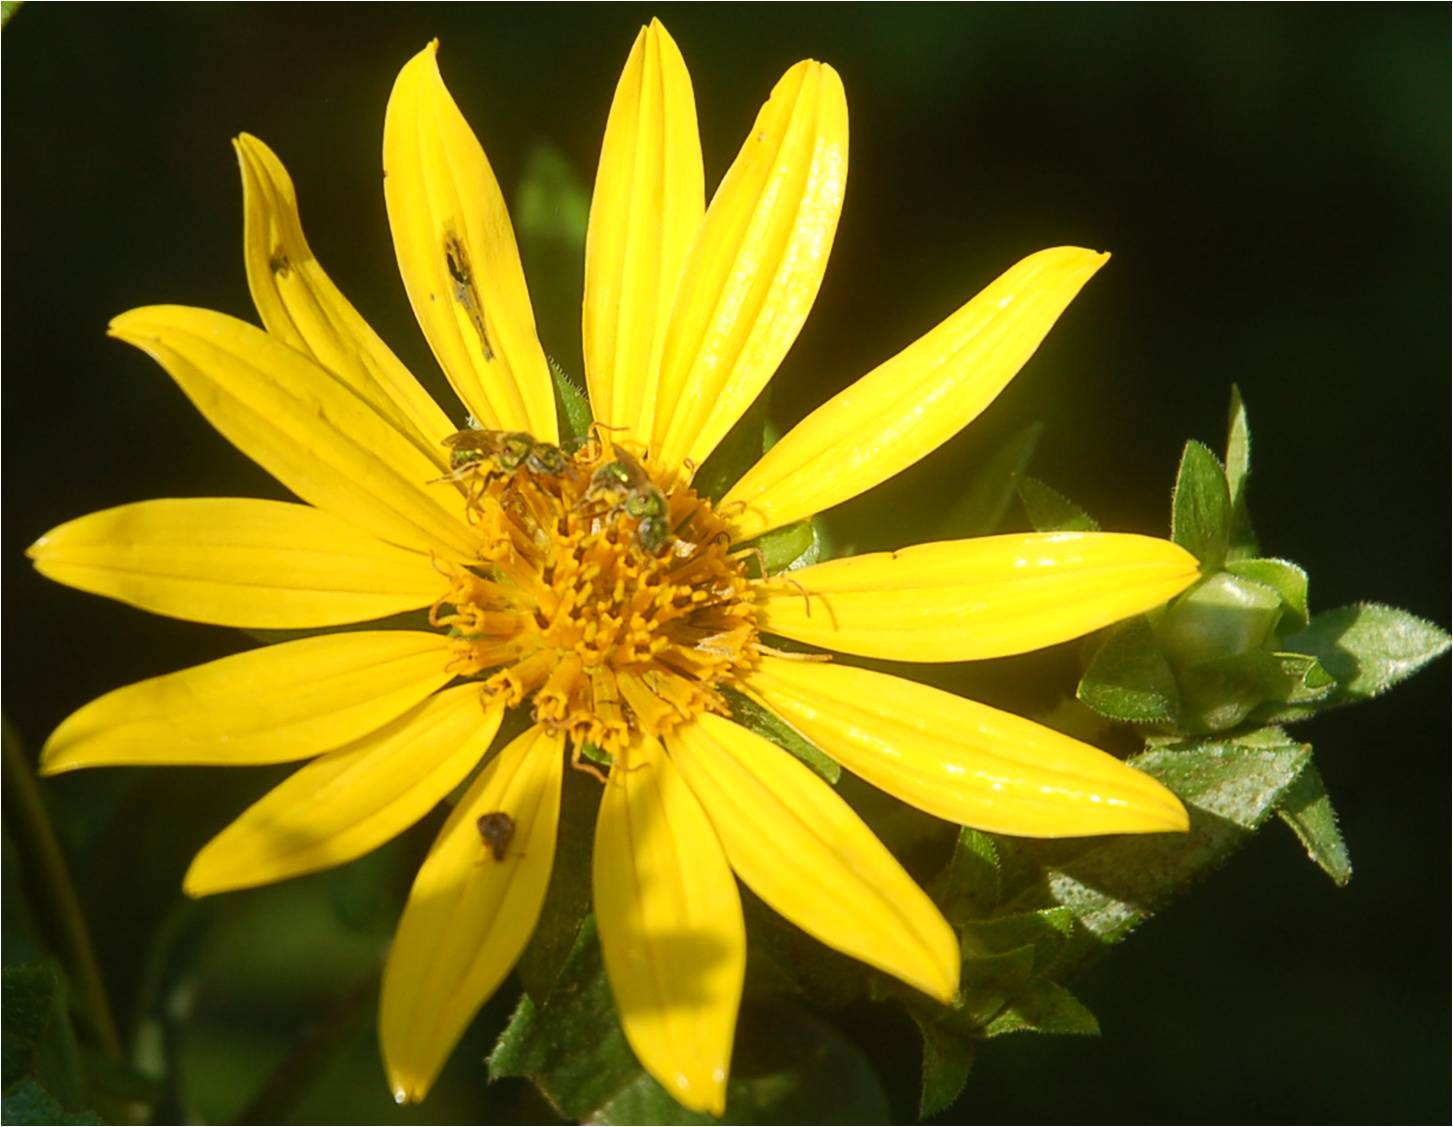 Halictid (sweat) bees on Helianthus (sunflower) at ECWA's Glennstone Preserve